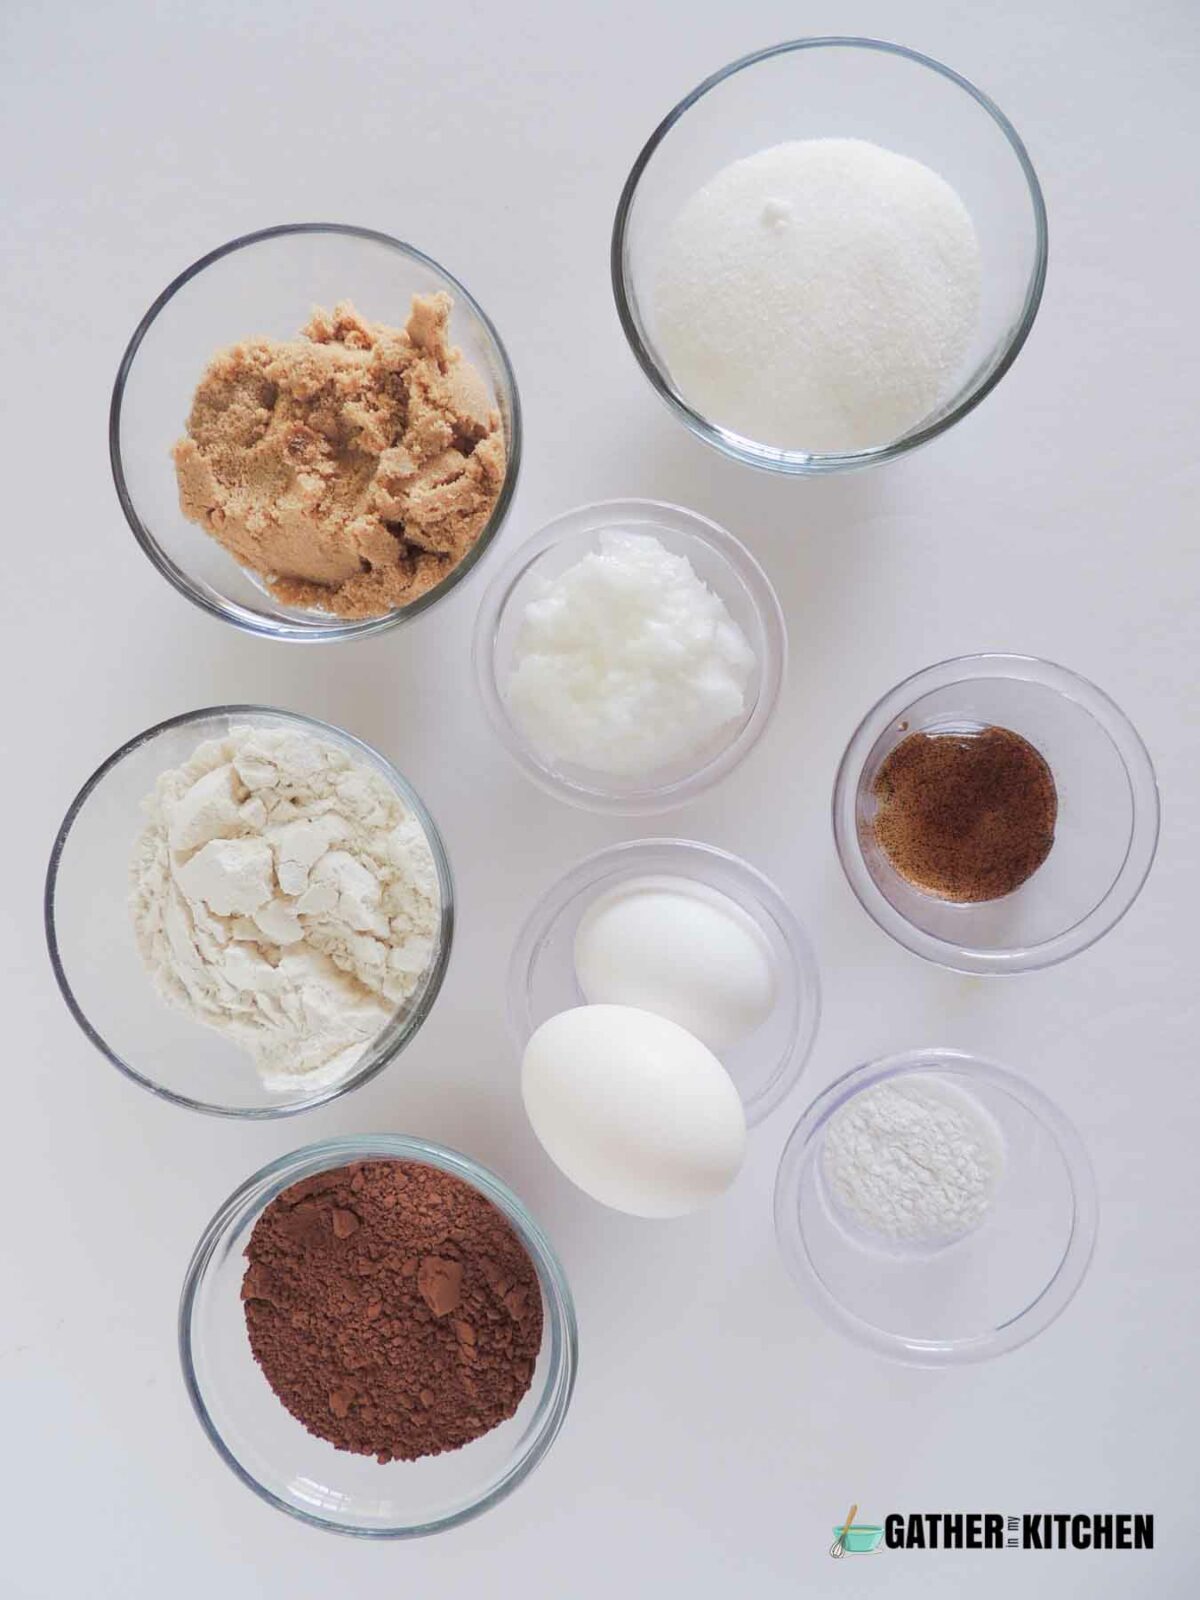 Ingredients: granulated sugar, coconut oil, vanilla extract, eggs, baking powder & salt, cocoa powder, all purpose flour, and brown sugar.